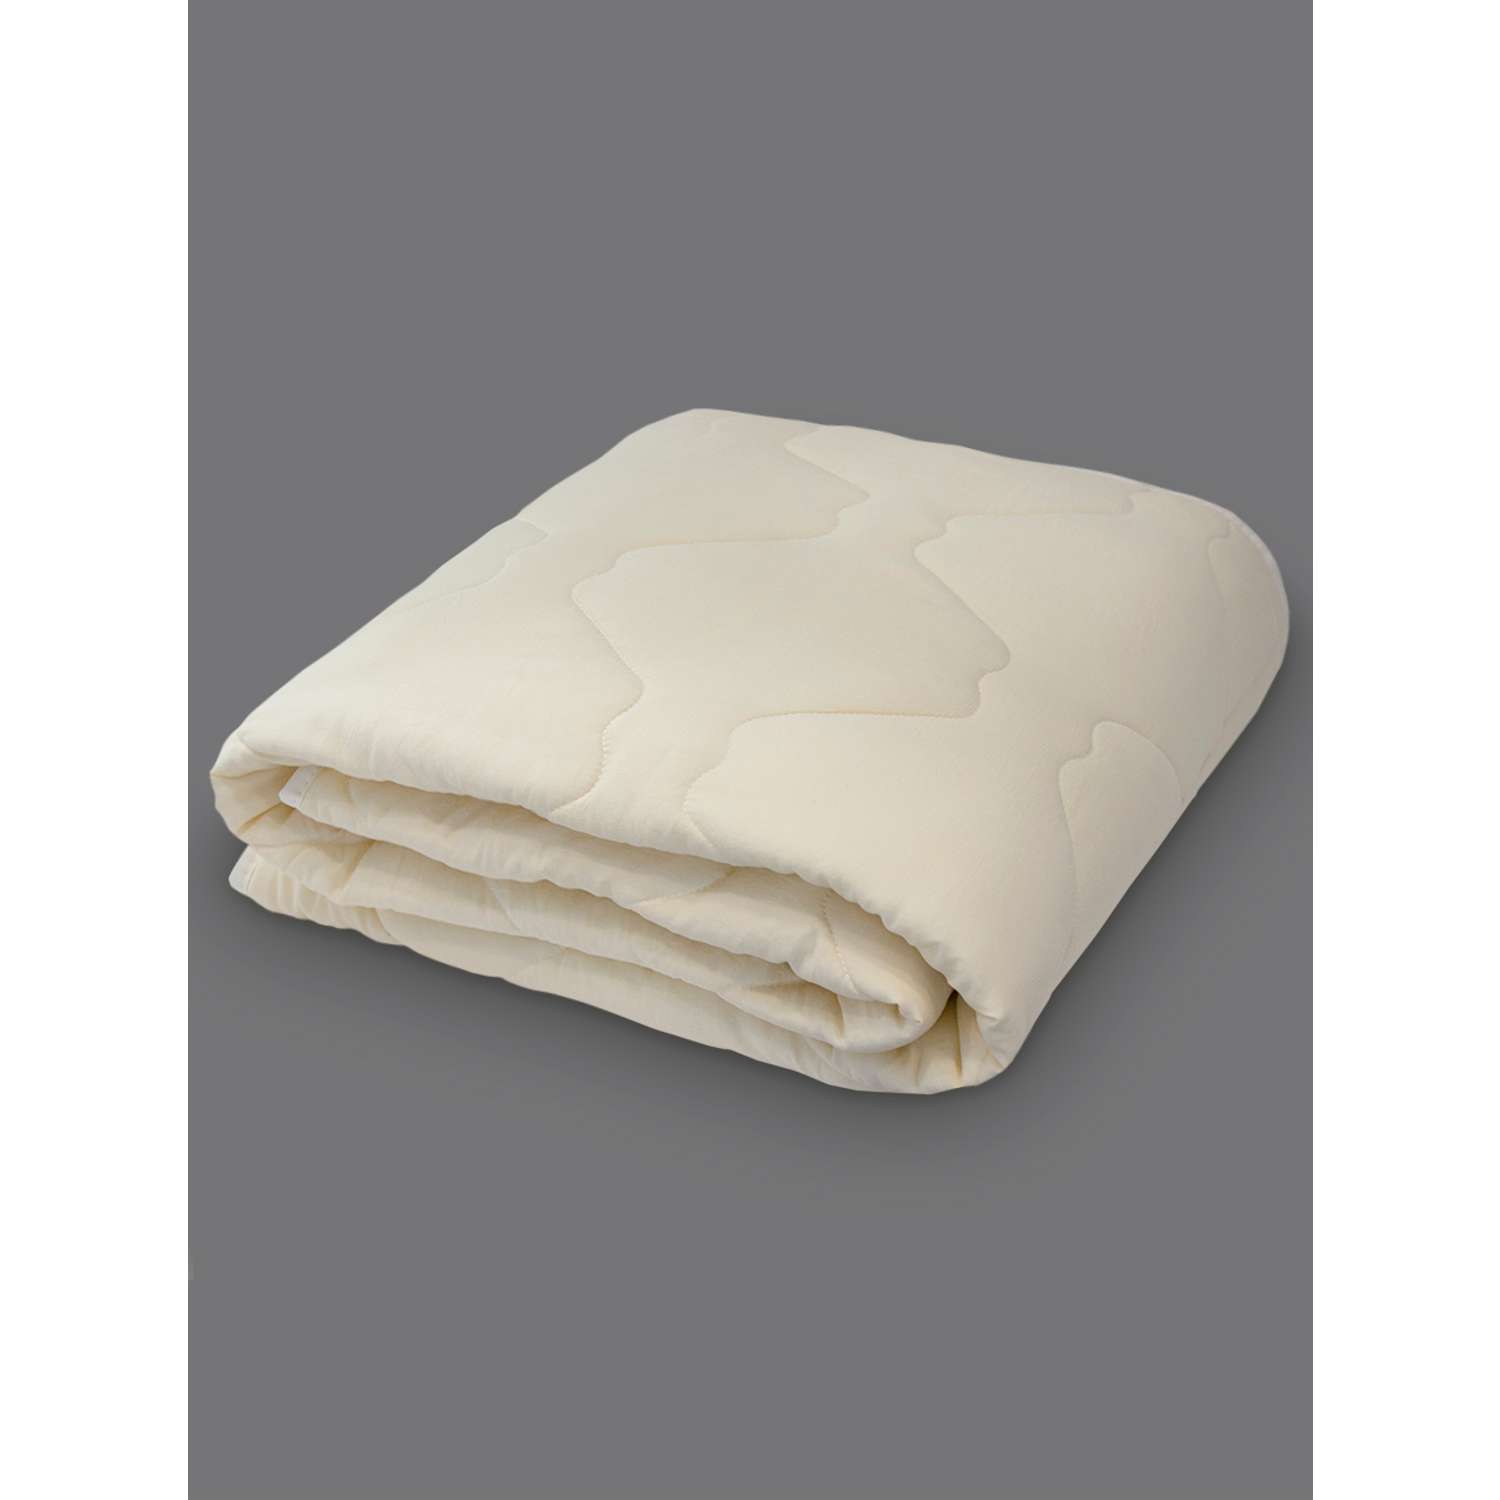 Одеяло SELENA Crinkle line Евро 200х215 см с наполнителем Лебяжий пух бежевое - фото 1